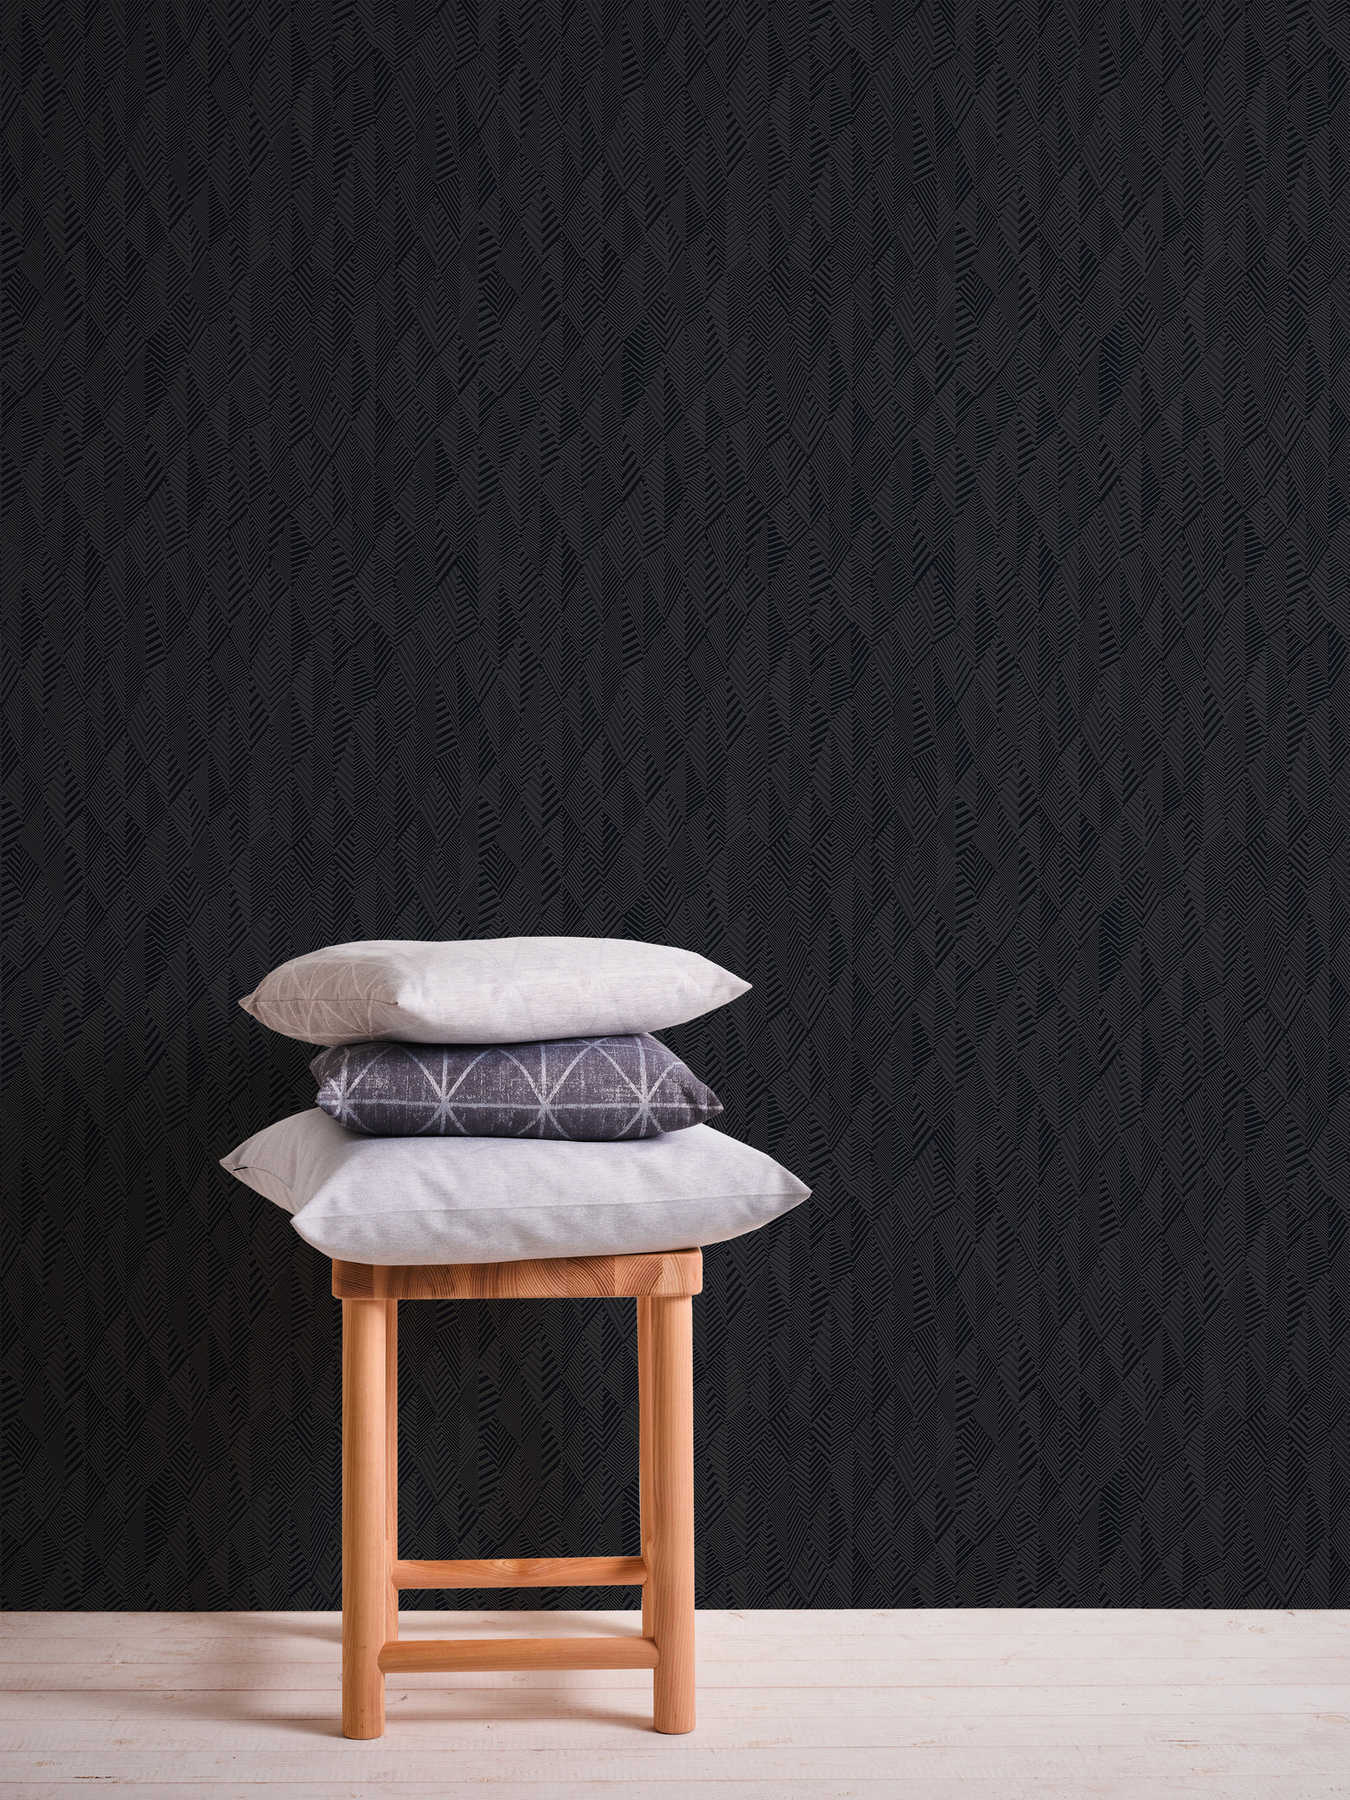             Wallpaper lined textured pattern & gloss finish - Black
        